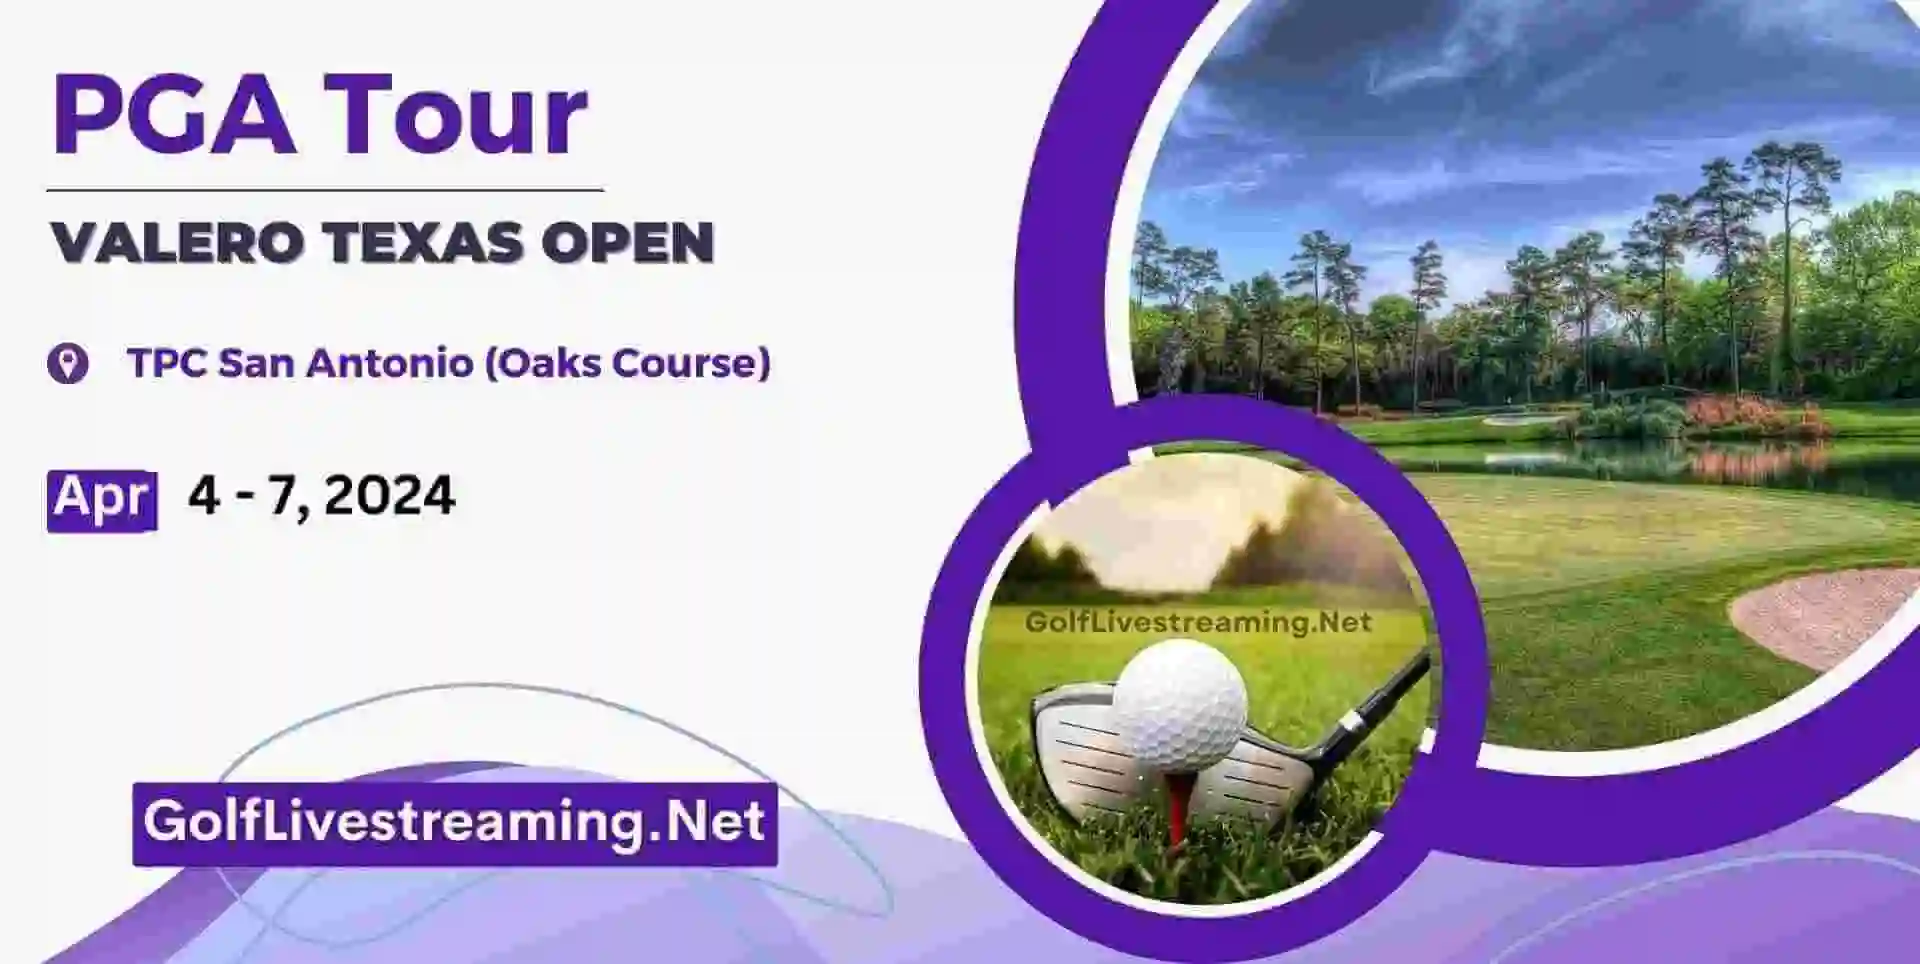 Valero Texas Open 2019 Golf Stream